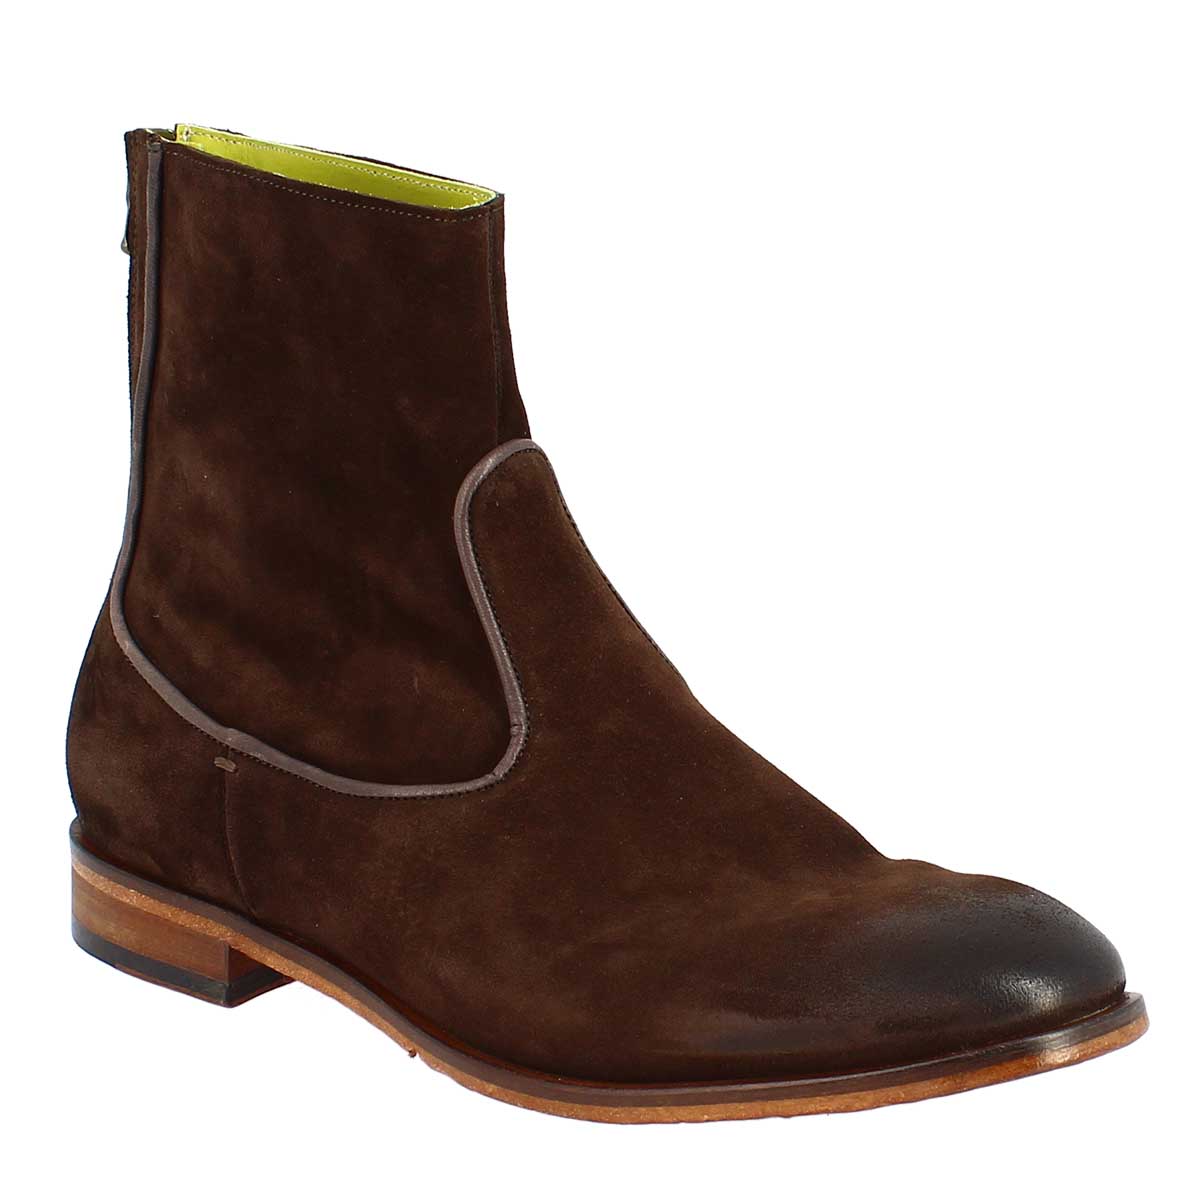 Men's ankle boot in dark brown suede with back zip